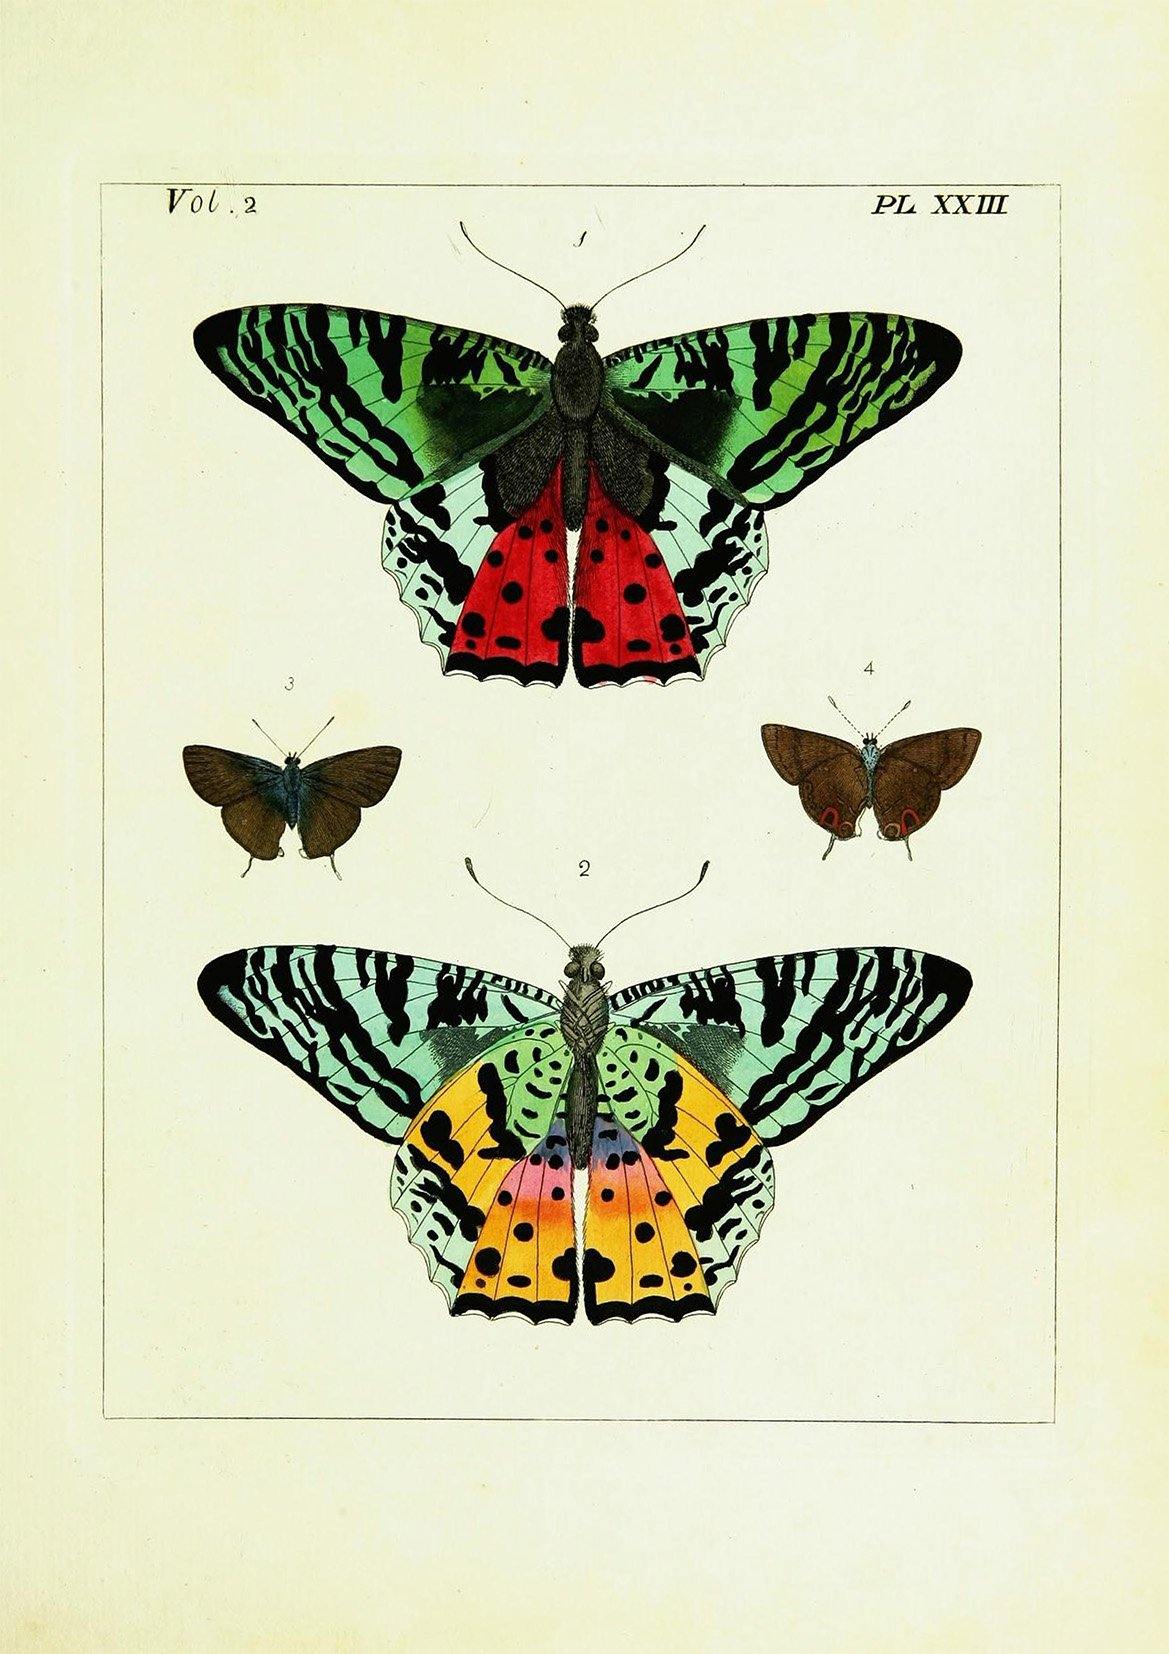 FOUR BUTTERFLIES PRINT: Vintage Butterfly Art Illustration - Pimlico Prints